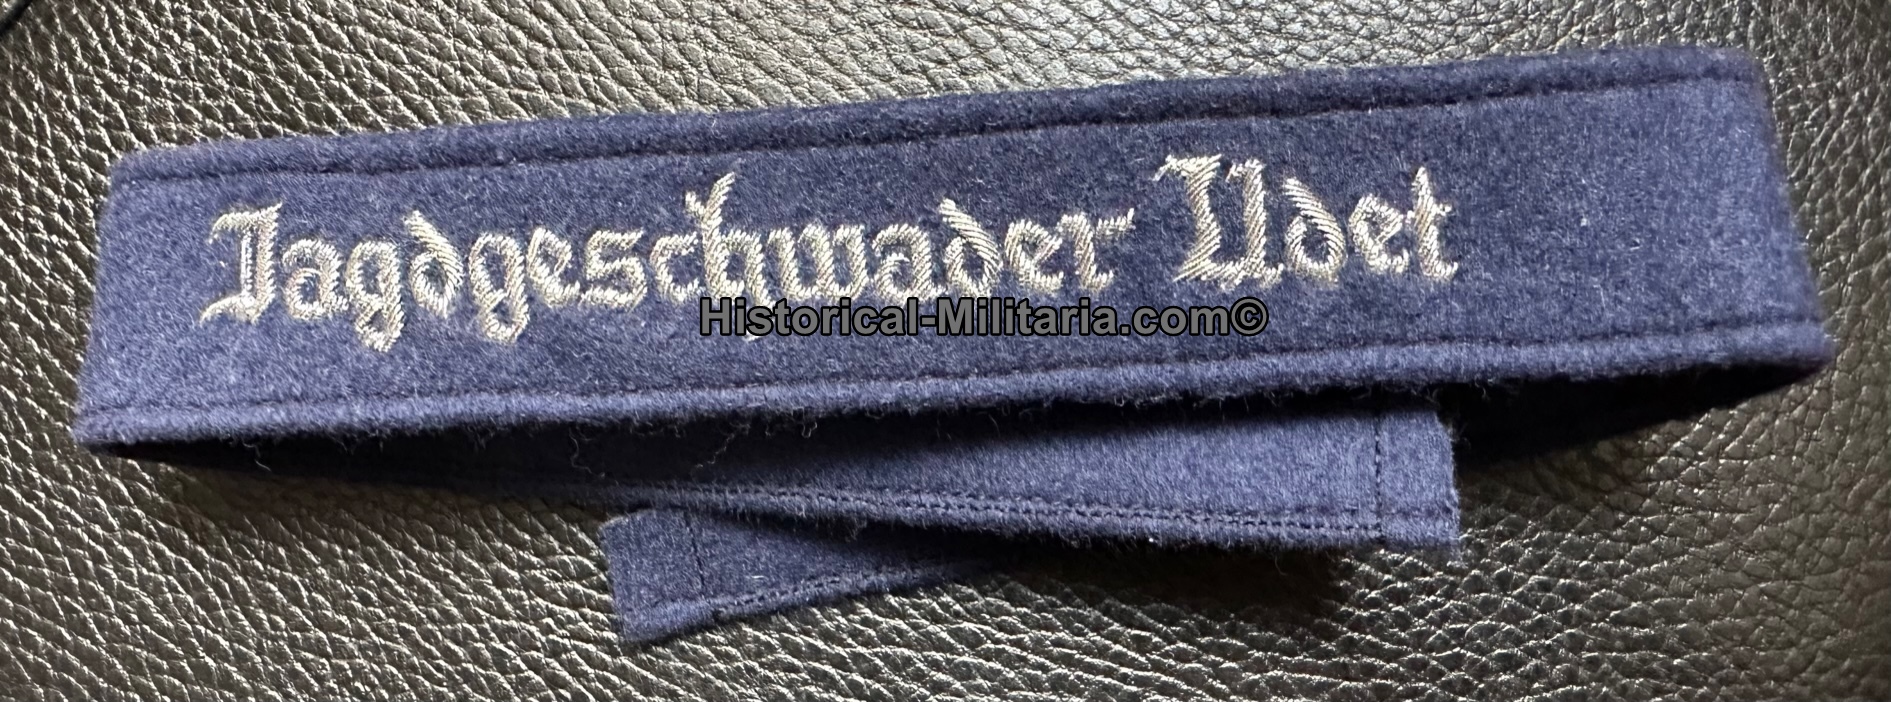 Luftwaffe Jagdgeschwader Udet Officer cuff band - Ärmelband Luftwaffe Jagdgeschwader Udet für Offiziere - Fascia da braccio Luftwaffe Jagdgeschwader Udet per gli Ufficiali